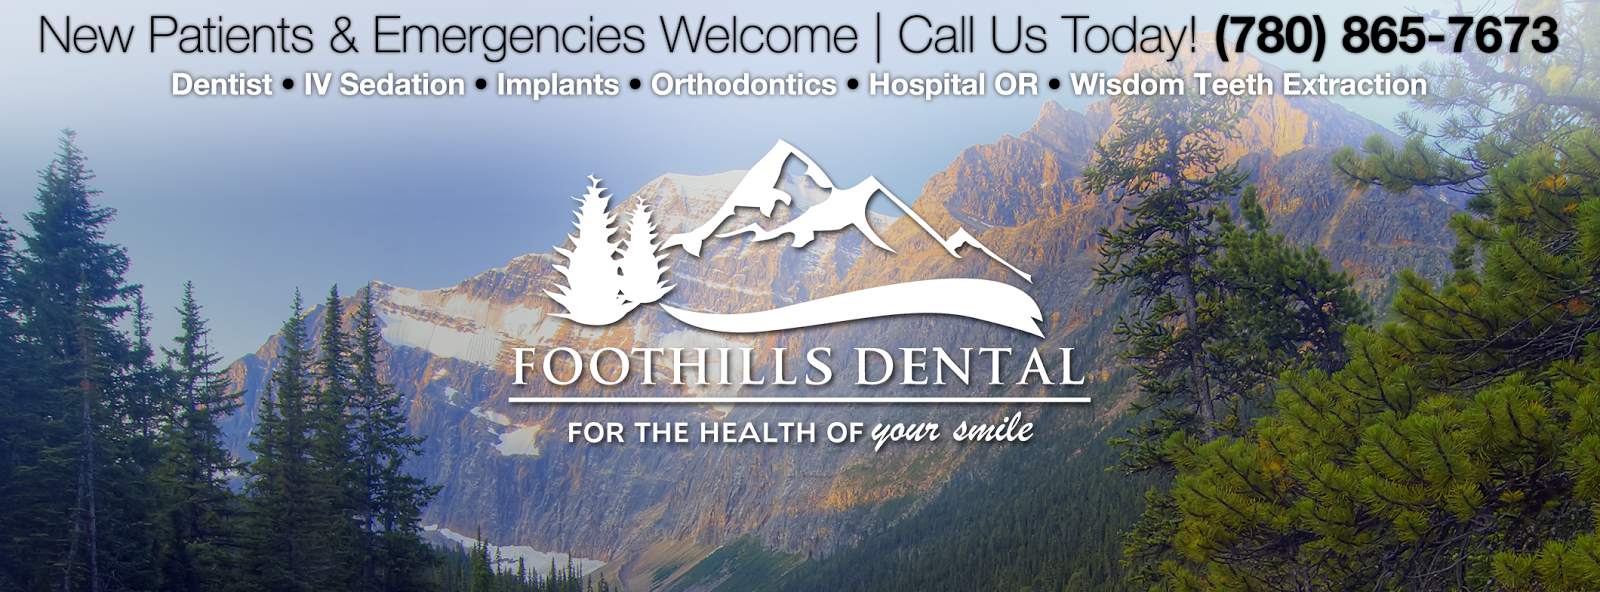 Foothills Dental 780 865-7673